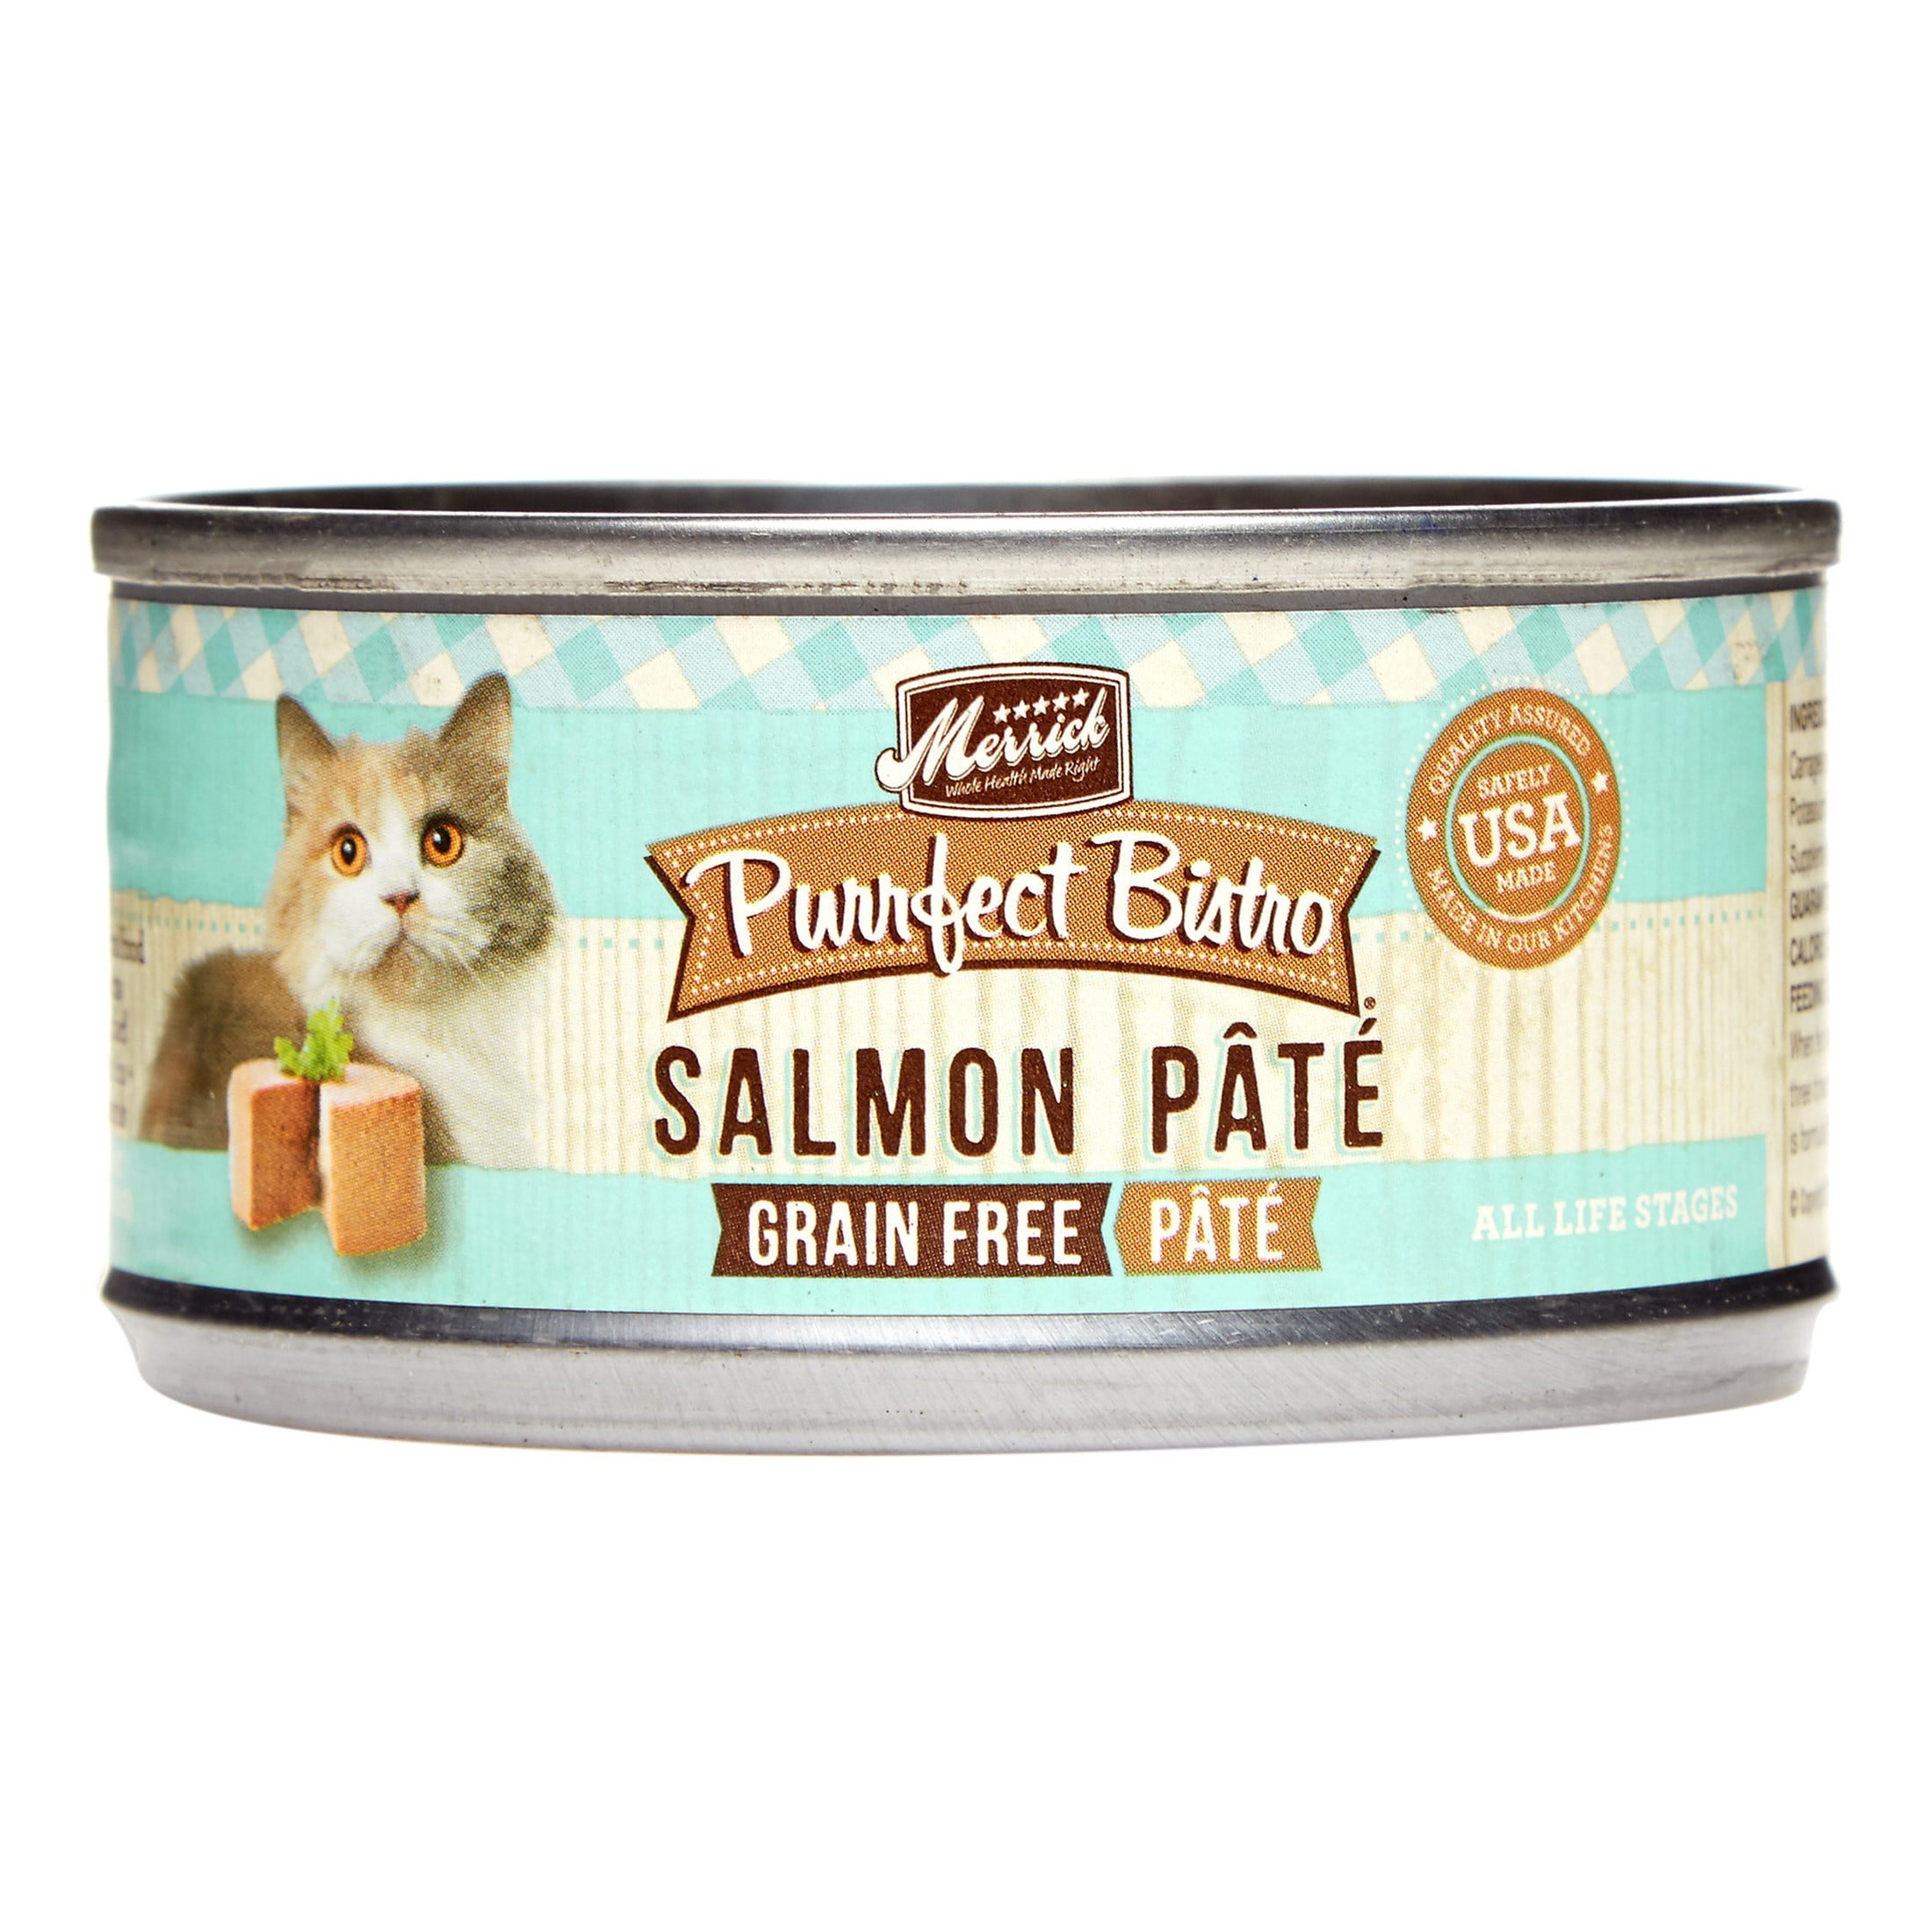 Merrick Purrfect Bistro GrainFree Salmon Pate Wet Cat Food, 3 oz